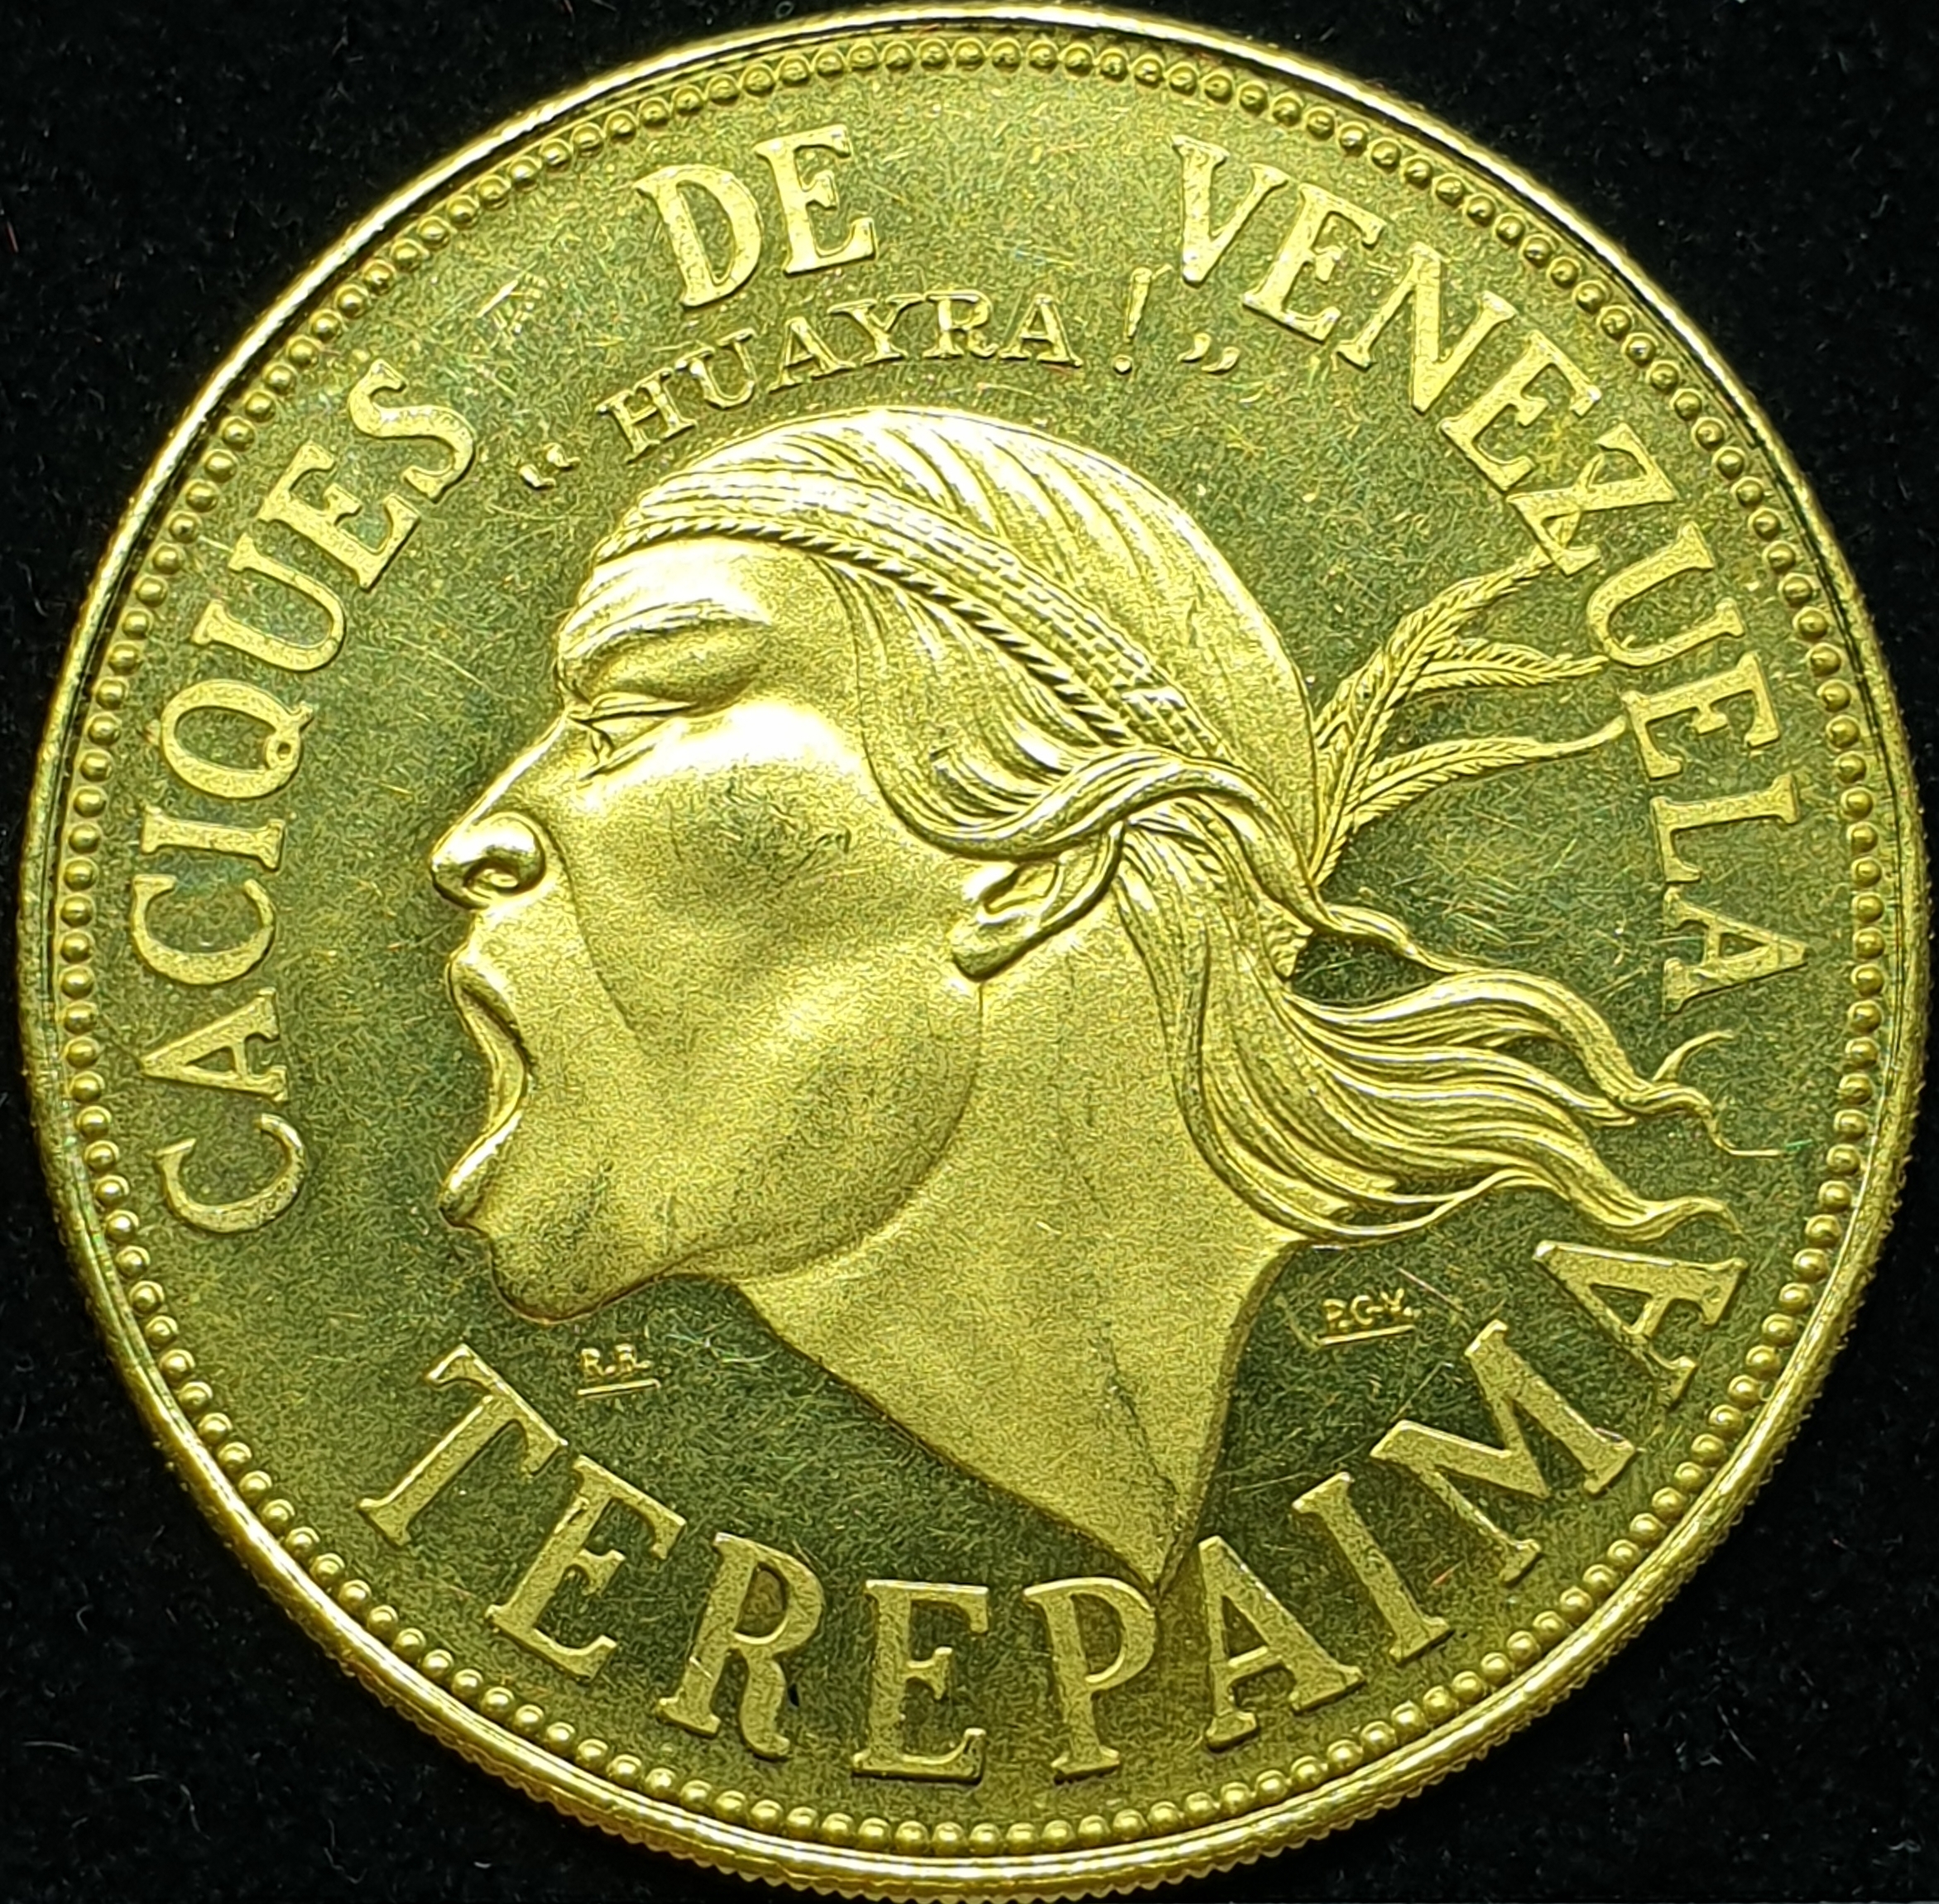 Venezuela - 60 bolivares - ND (1961) - Terepaima